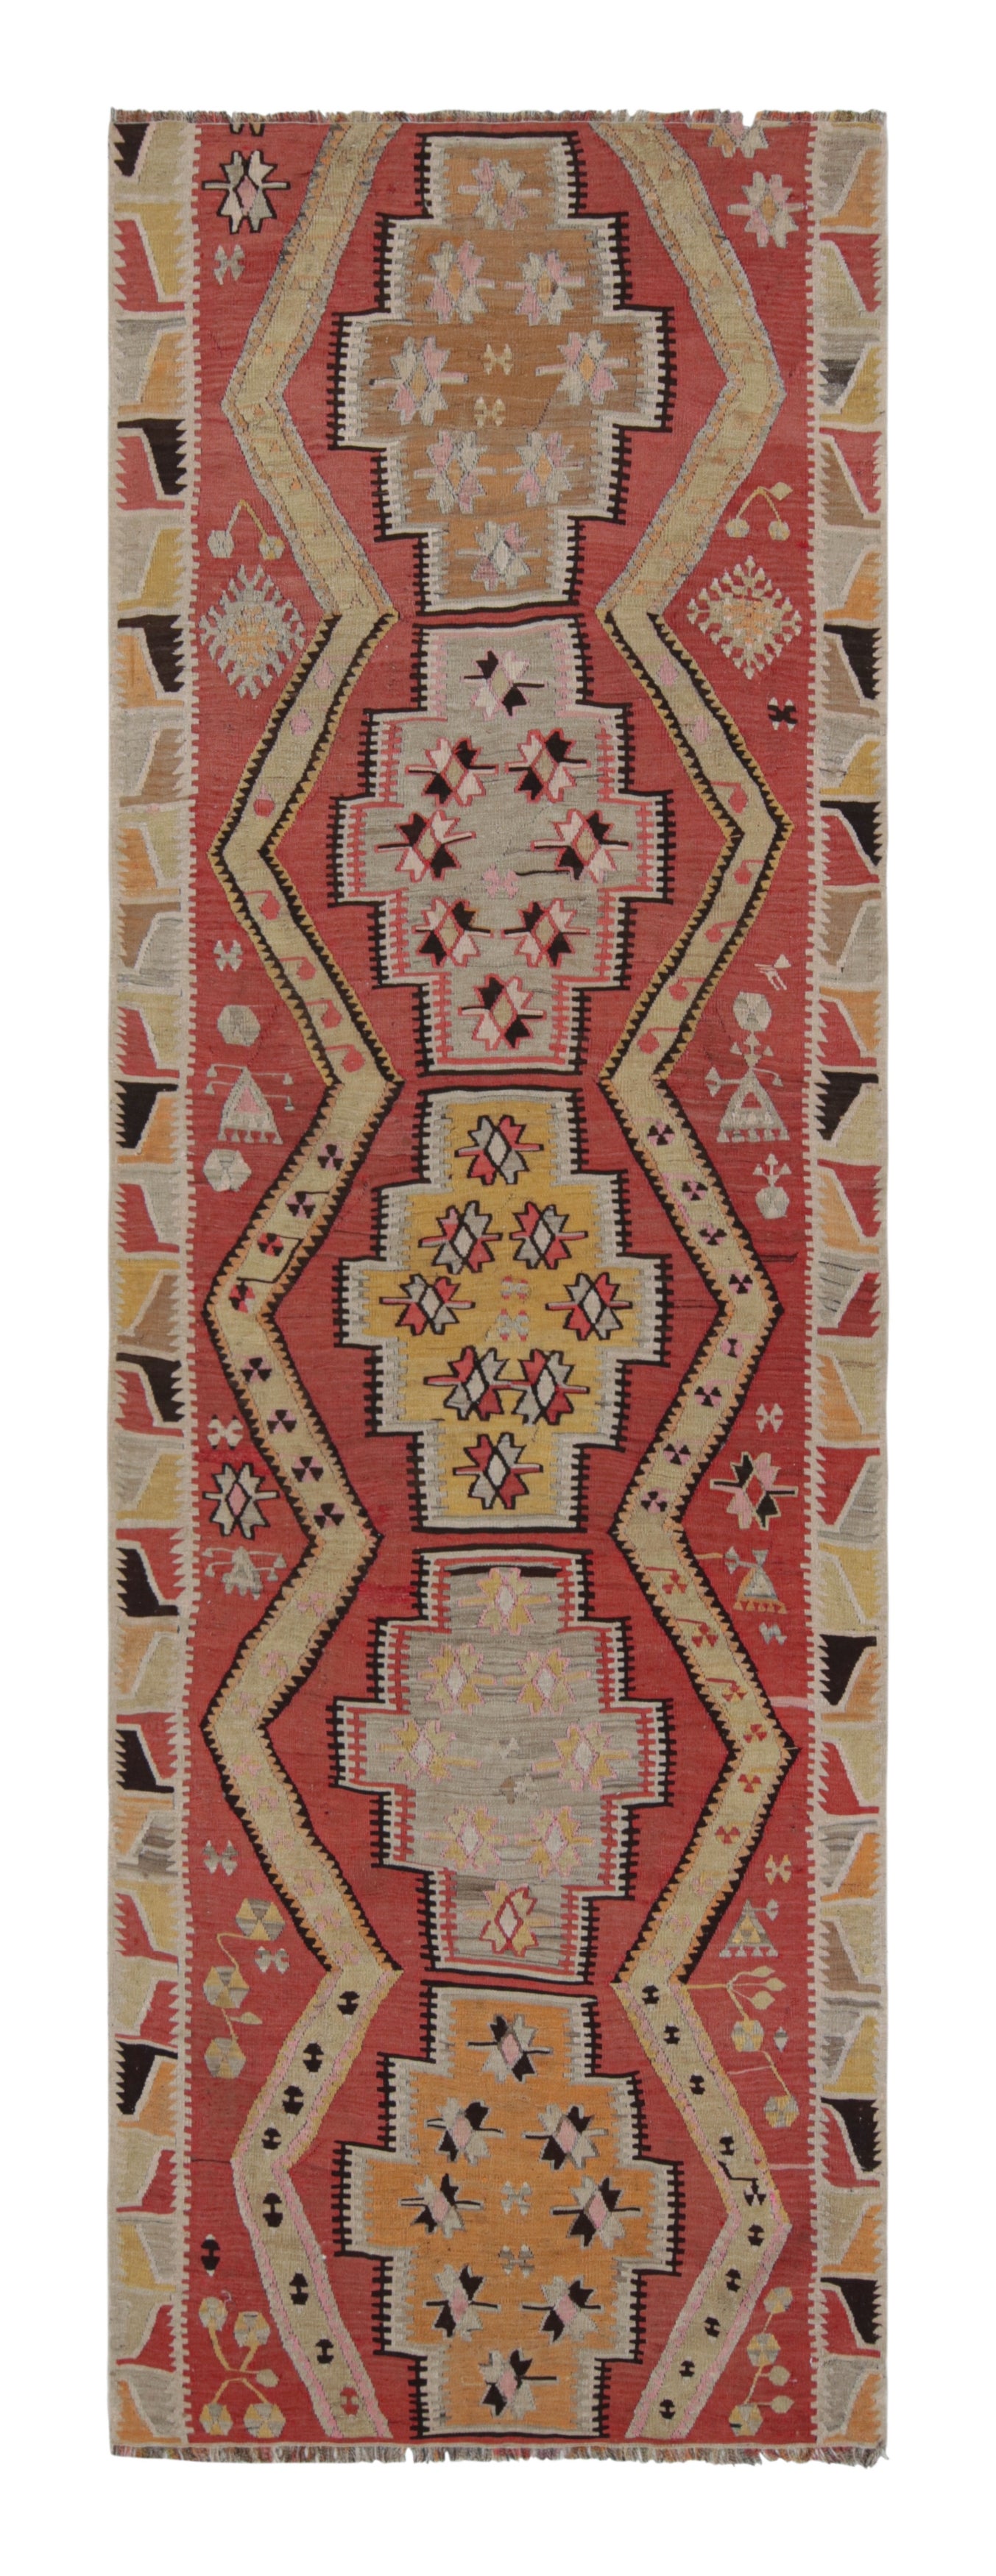 Vintage Kayseri Red and Golden-Yellow Wool Kilim Rug by Rug & Kilim For Sale